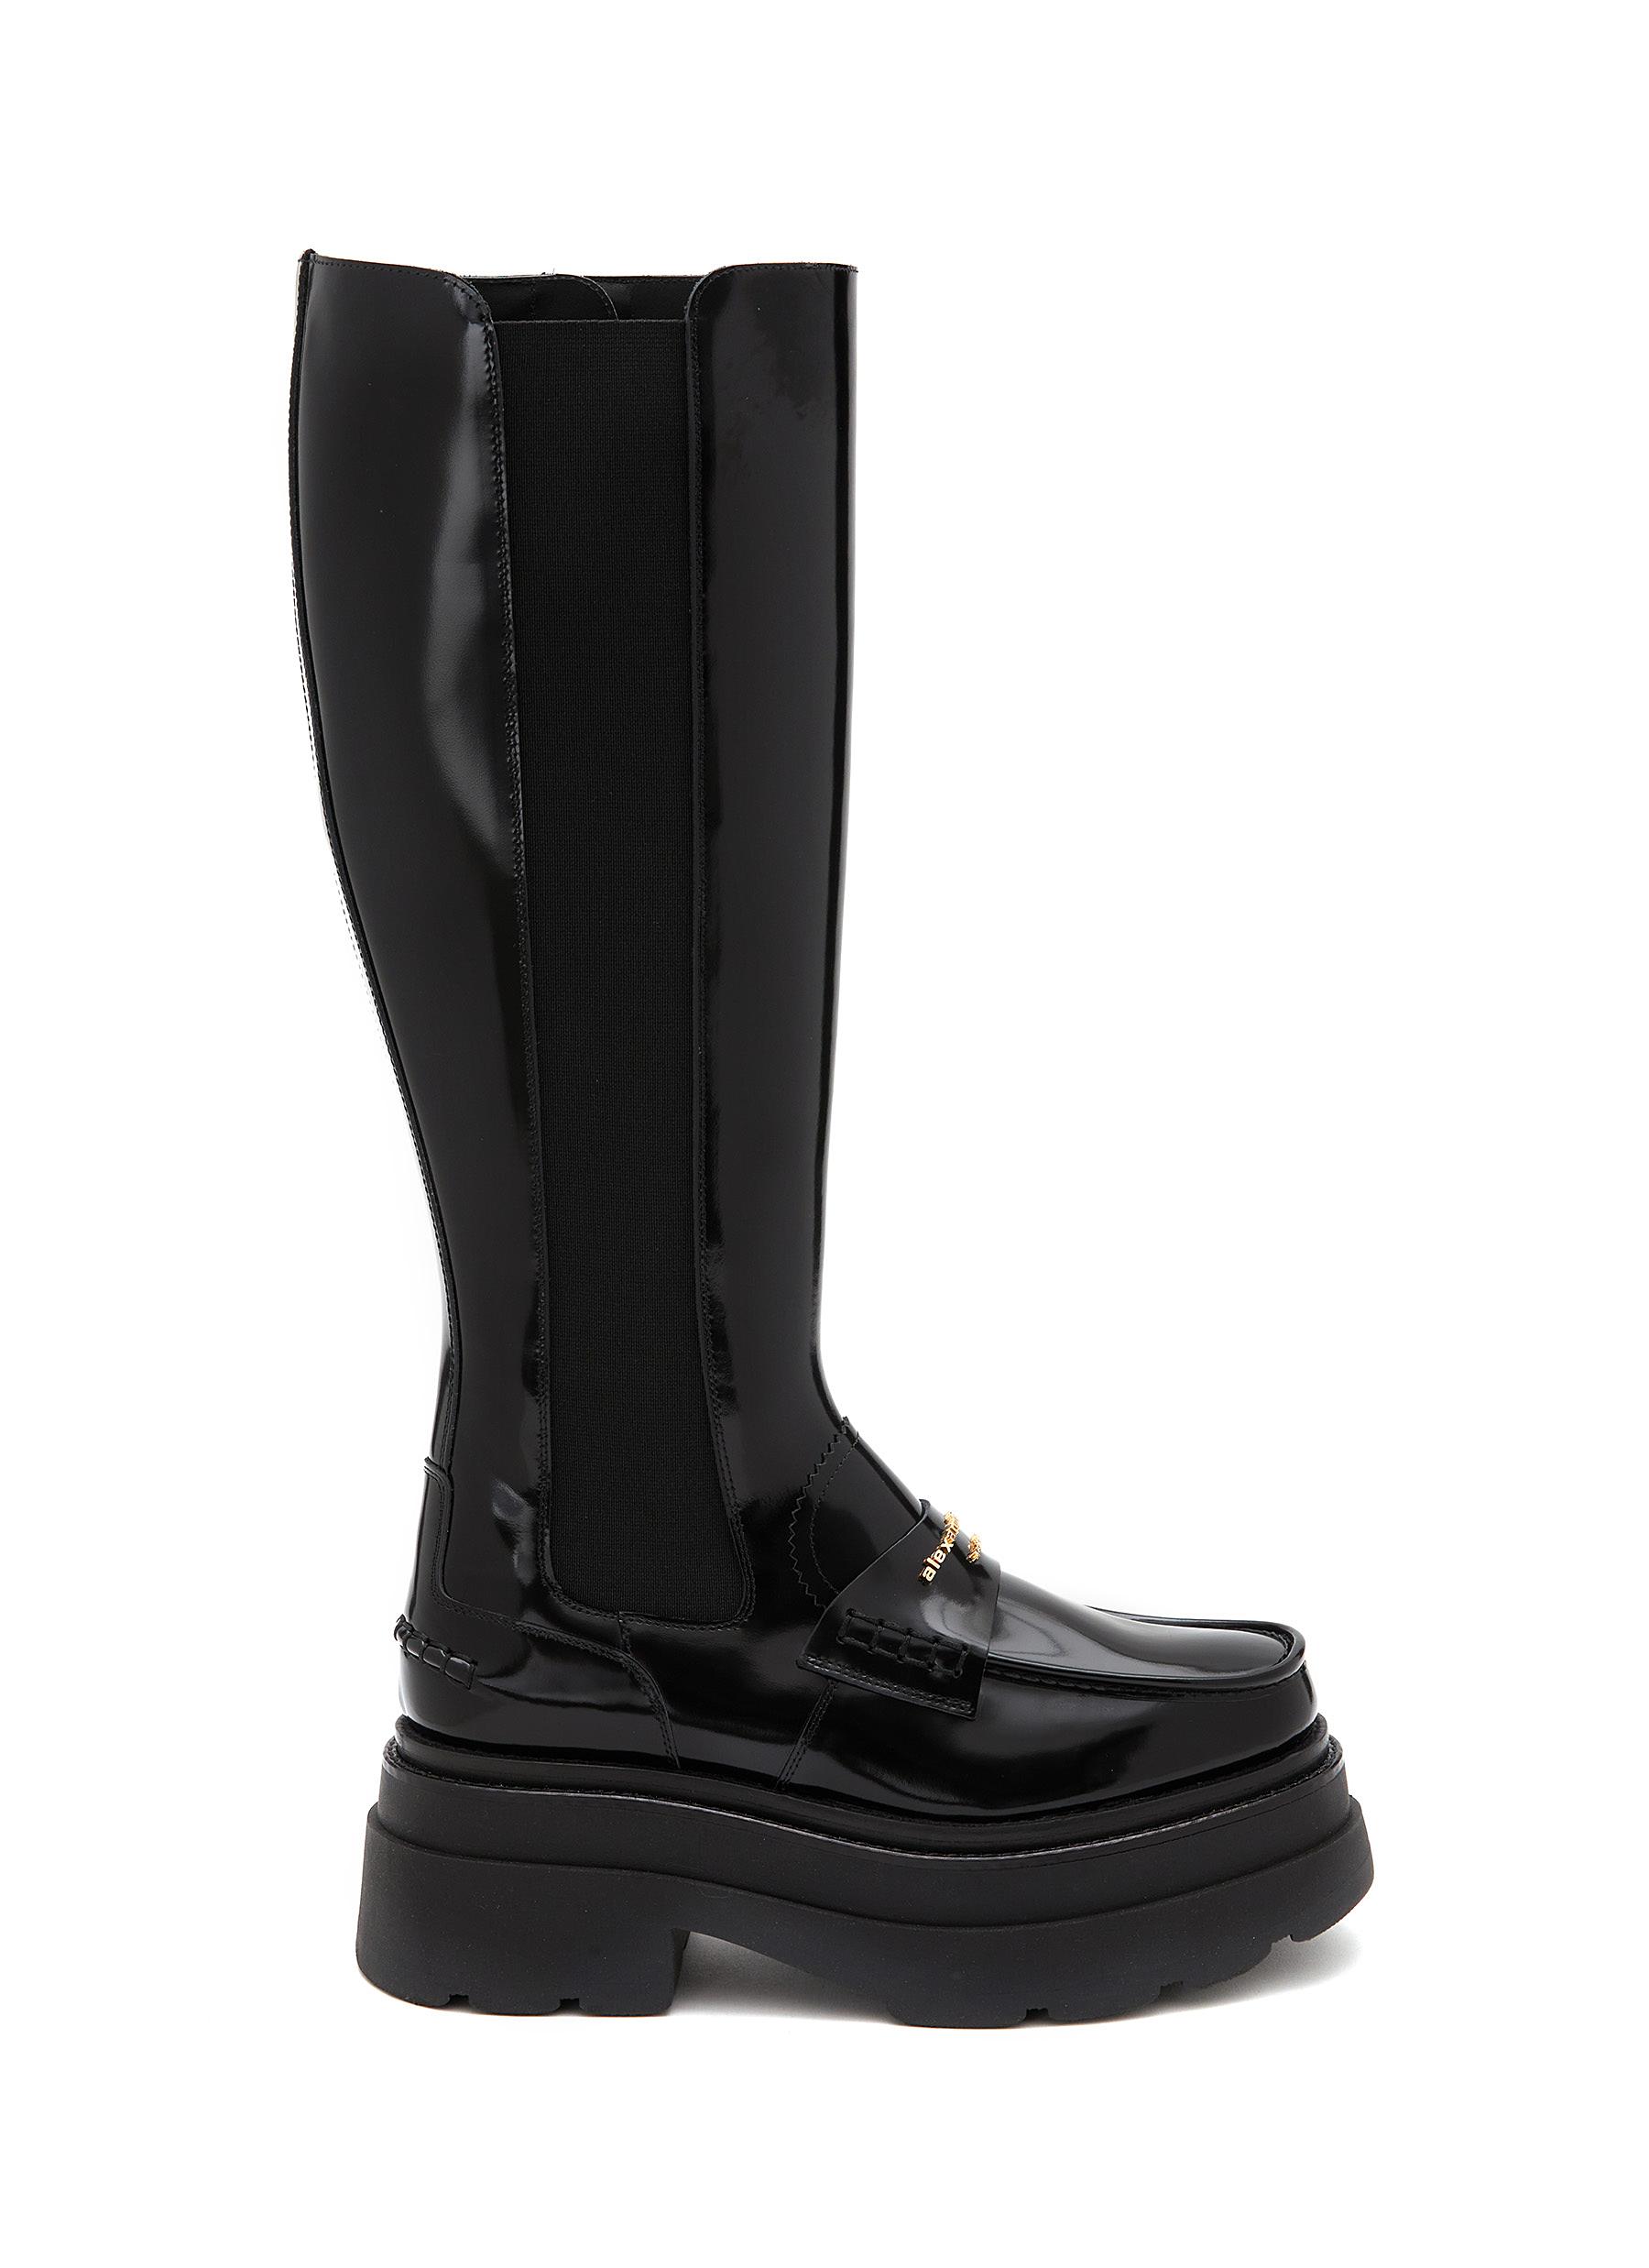 ALEXANDER WANG | Carter 75 Tall Patent Leather Boots | Women | Lane Crawford